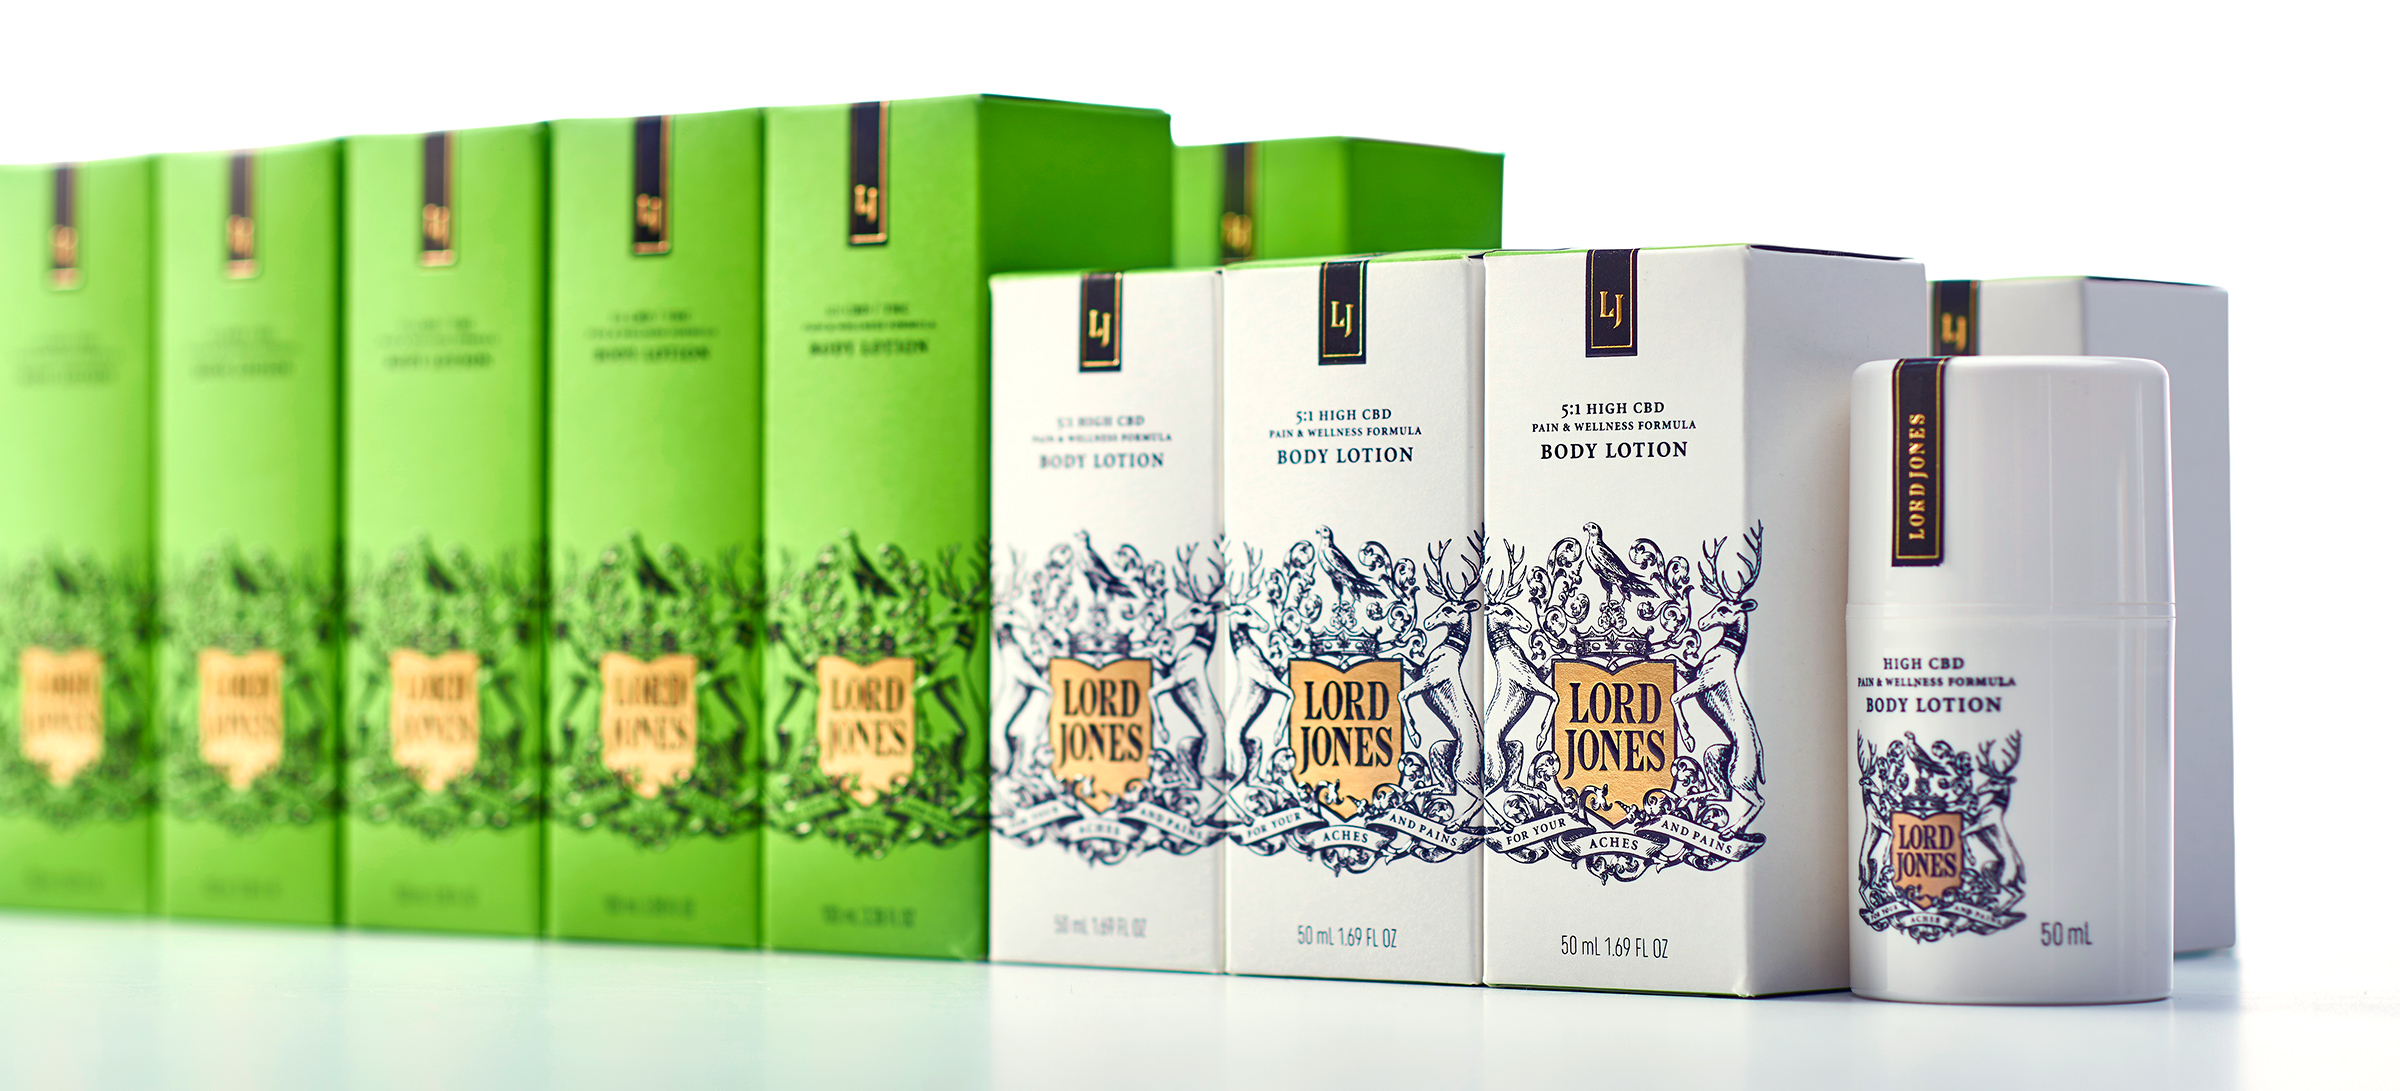 Lord Jones cannabis-infused lotions packaging design by Werner Design Werks